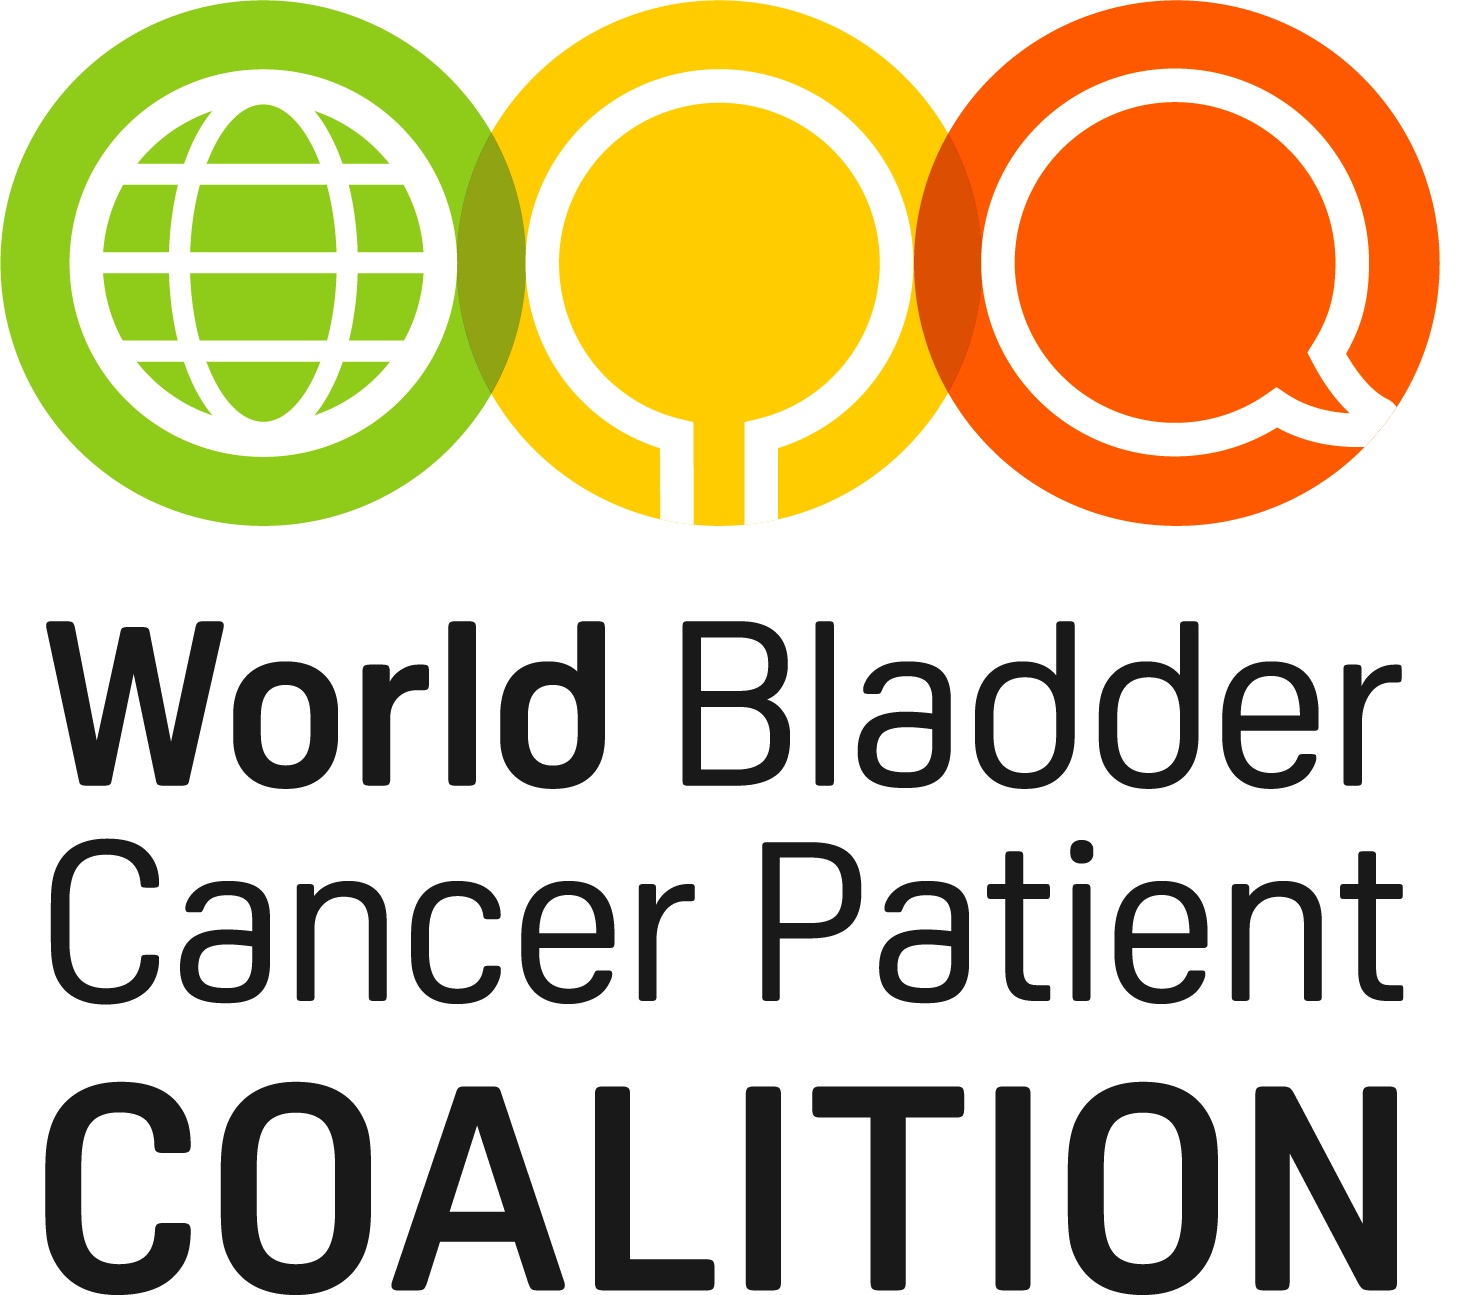 World Bladder Cancer Patient Coalition (WBCPC)